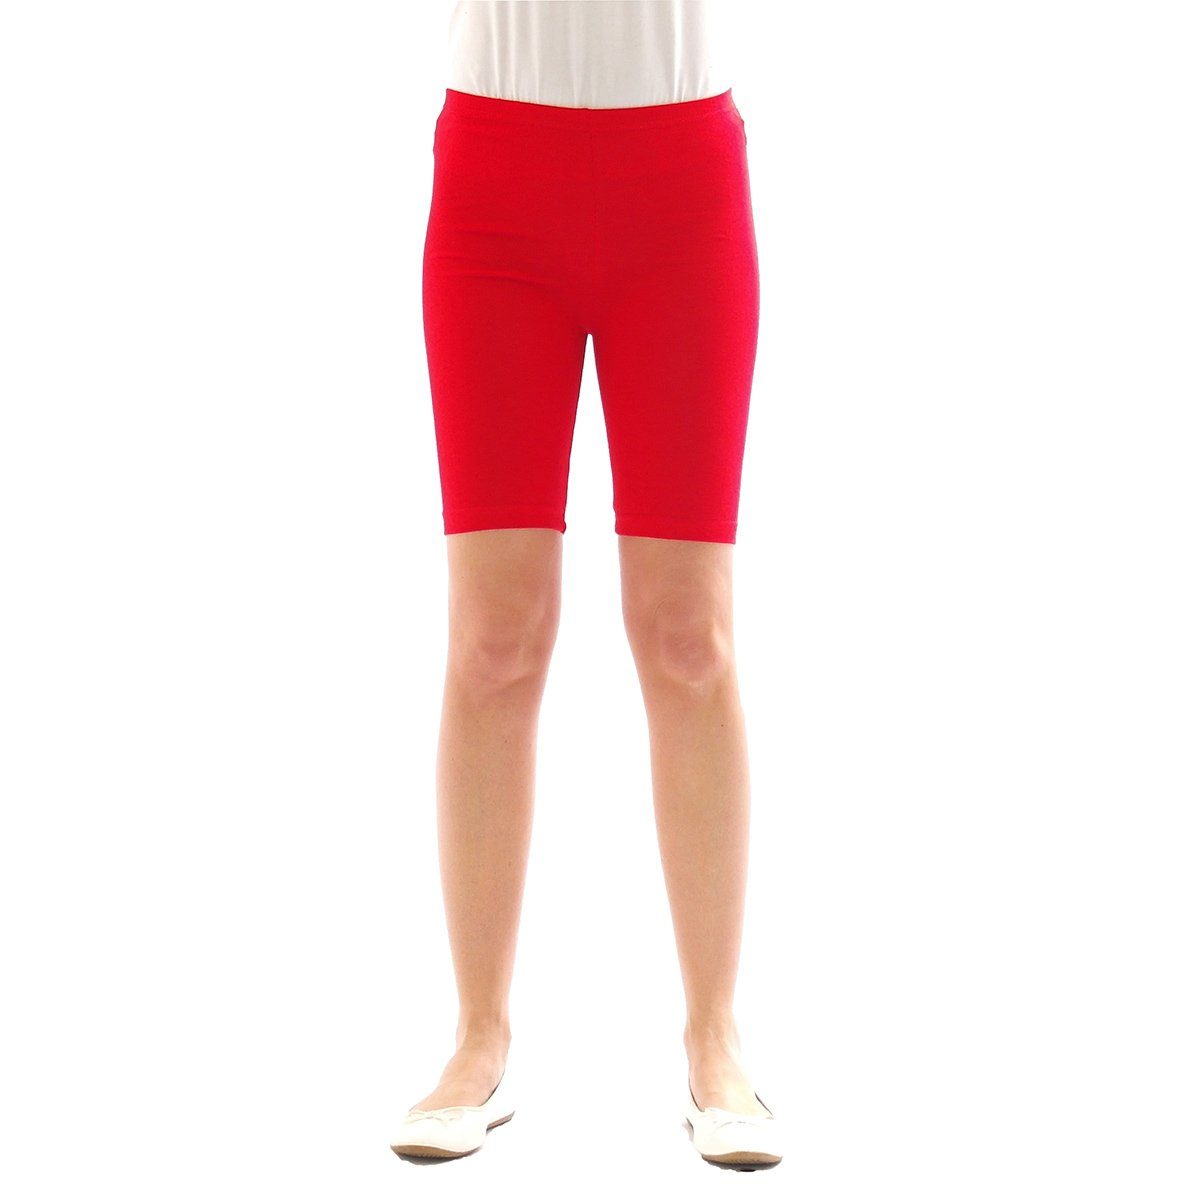 SYS Shorts Kinder Shorts Sport Pants 1/2 Baumwolle Jungen Mädchen rot